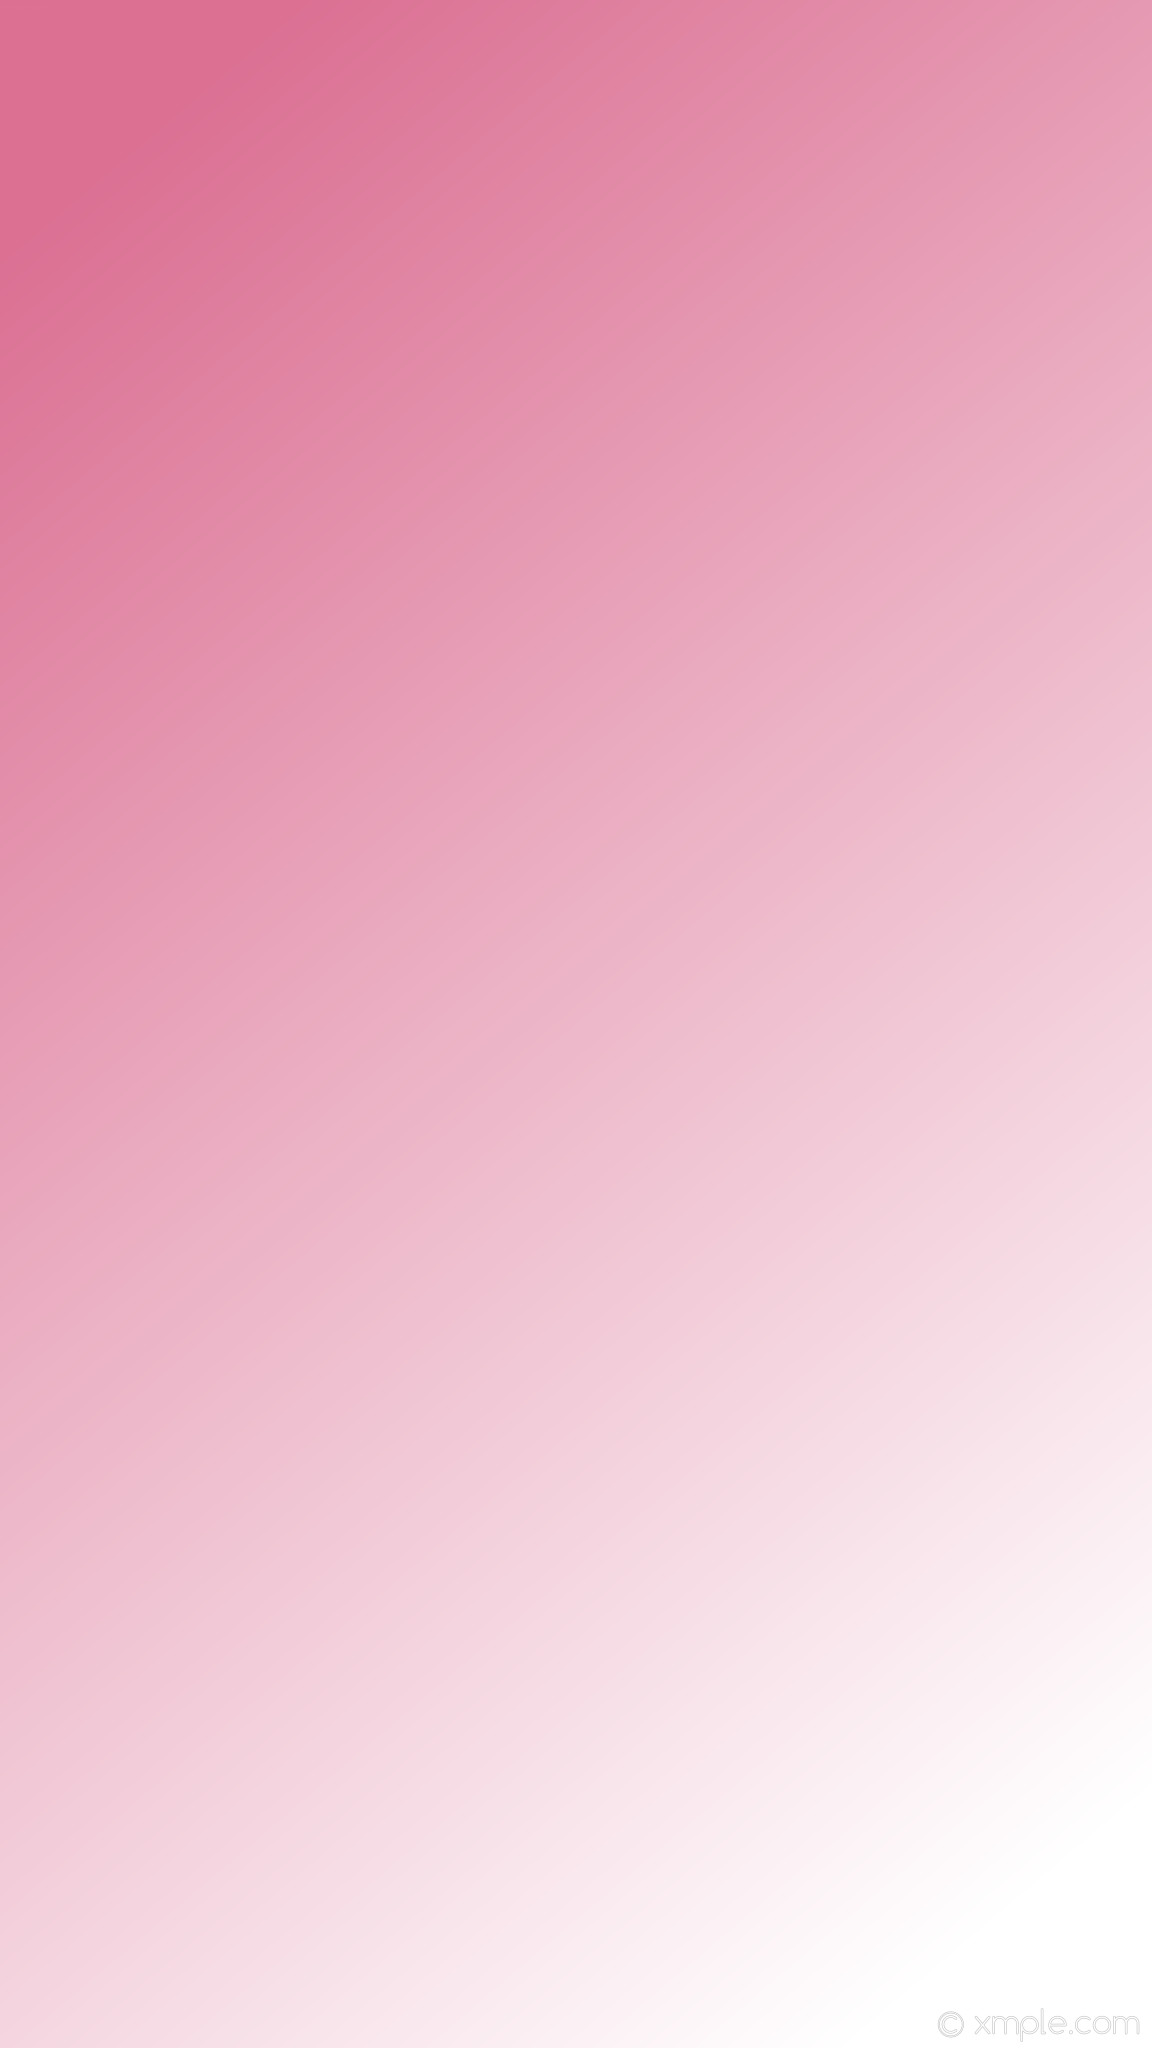 1152x2048 wallpaper pink linear white gradient pale violet red #db7093 #ffffff 105Â°